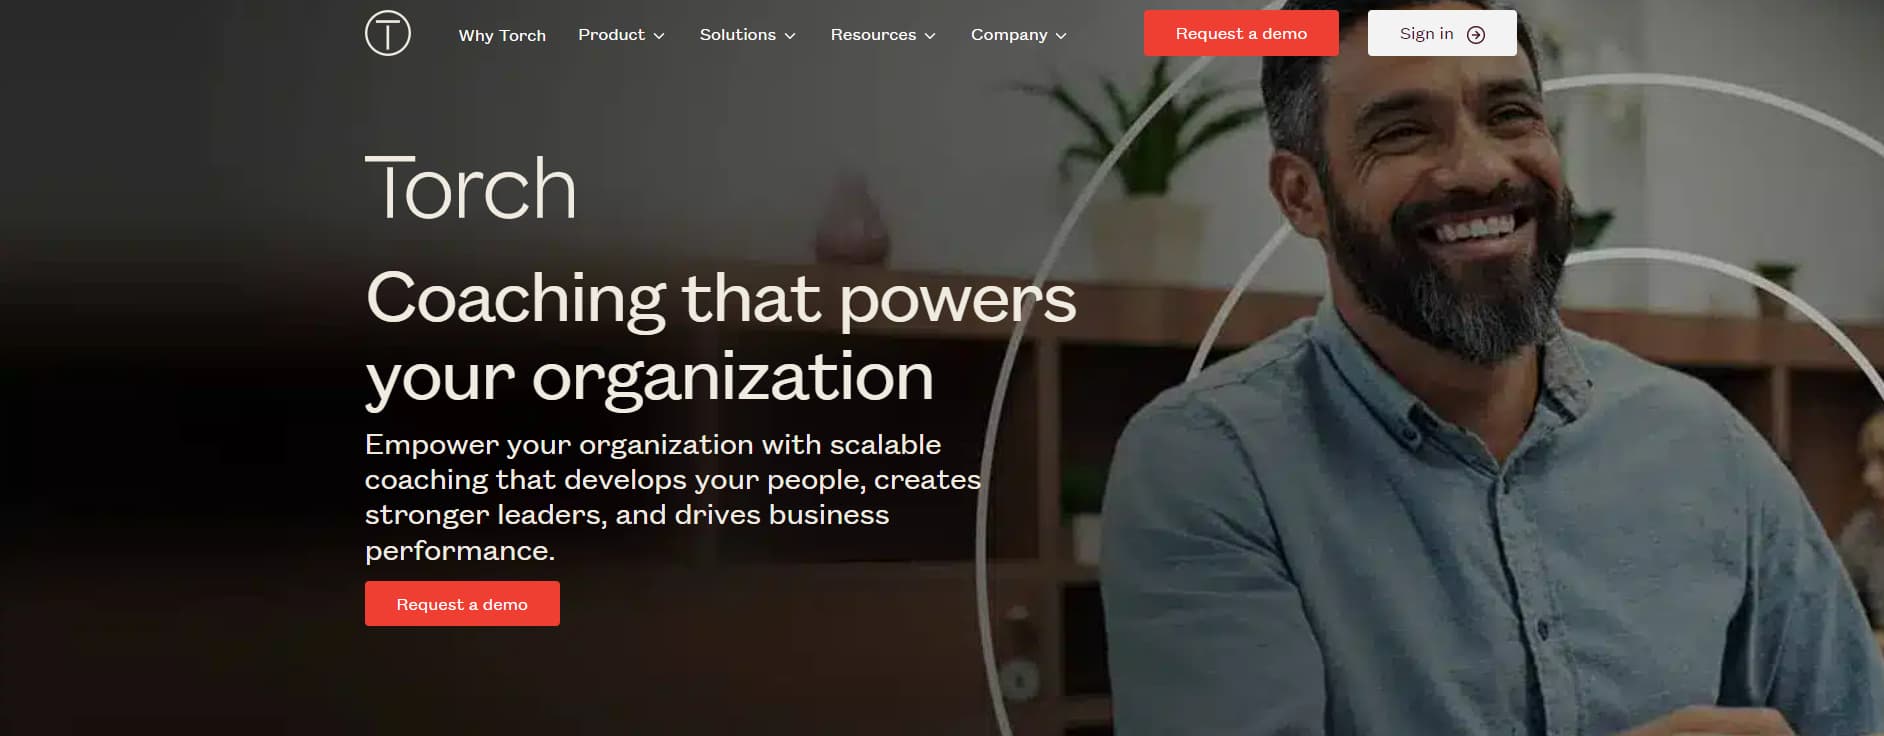 screenshot of the Torch leadership development program home page